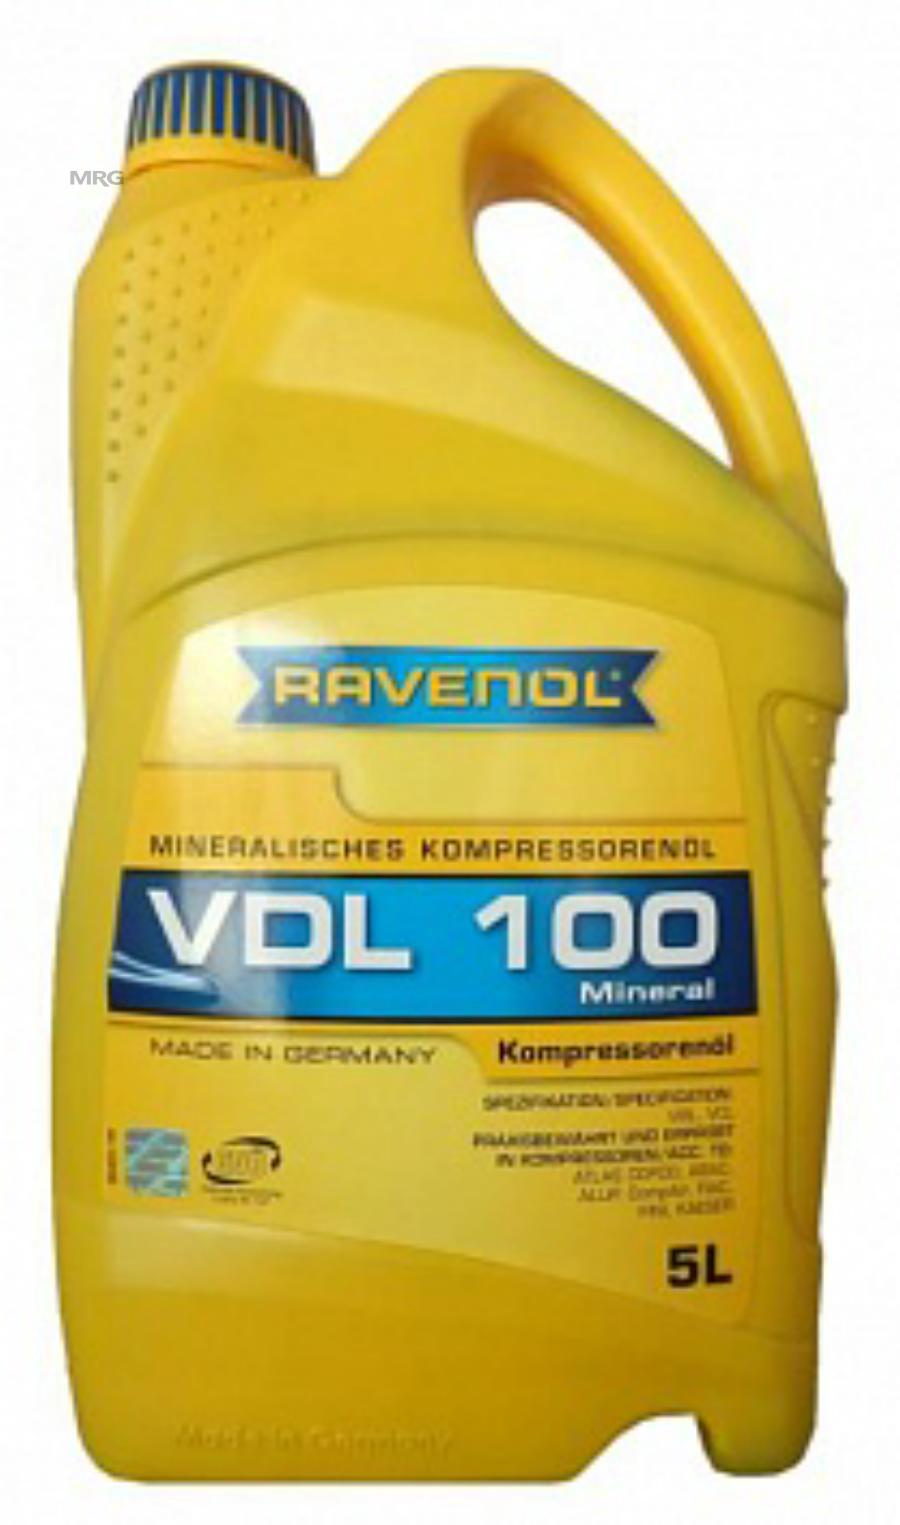 Ravenol vdl. Масло компрессорное VDL 100. Масло компрессорное Равенол. Ravenol 1112112004. 1111136-005-01-999 Ravenol.